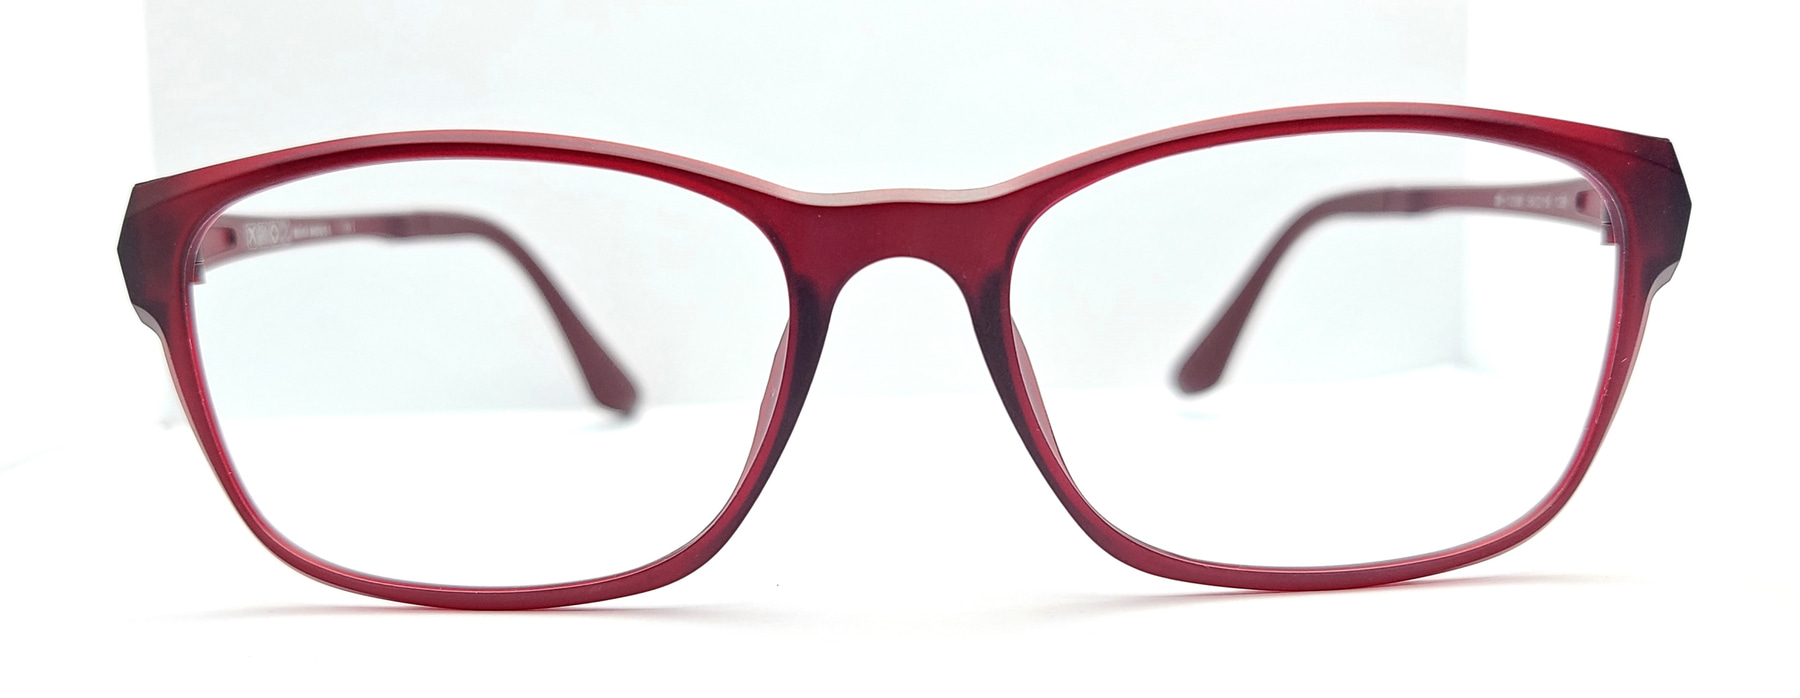 MINIHOUSE M-1208, Korean glasses, sunglasses, eyeglasses, glasses